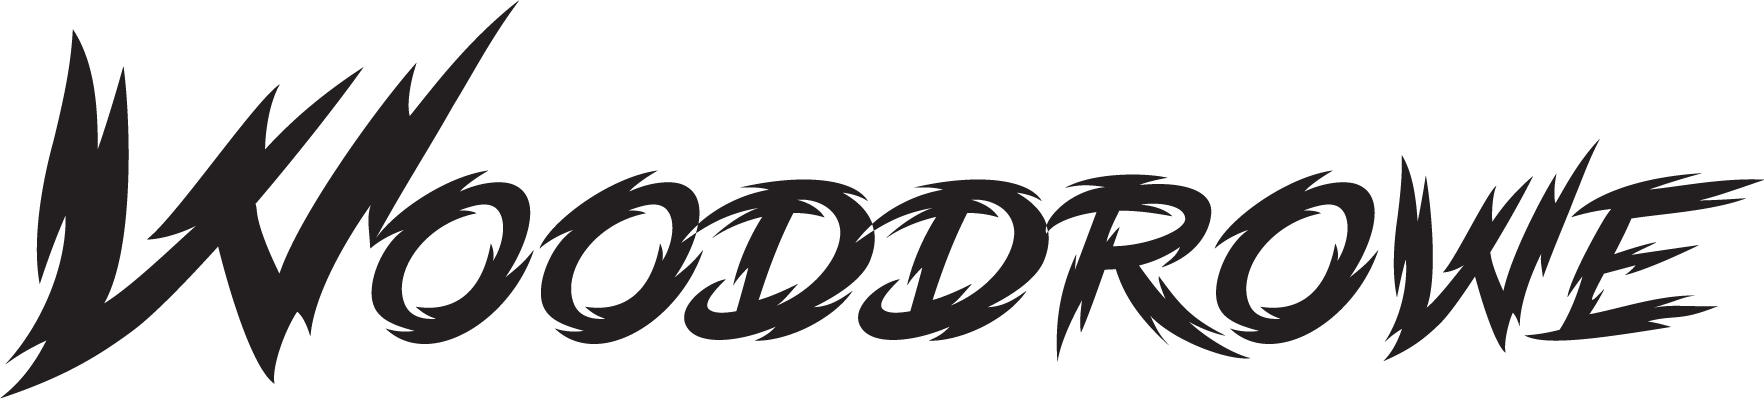 Wooddrowe -logo